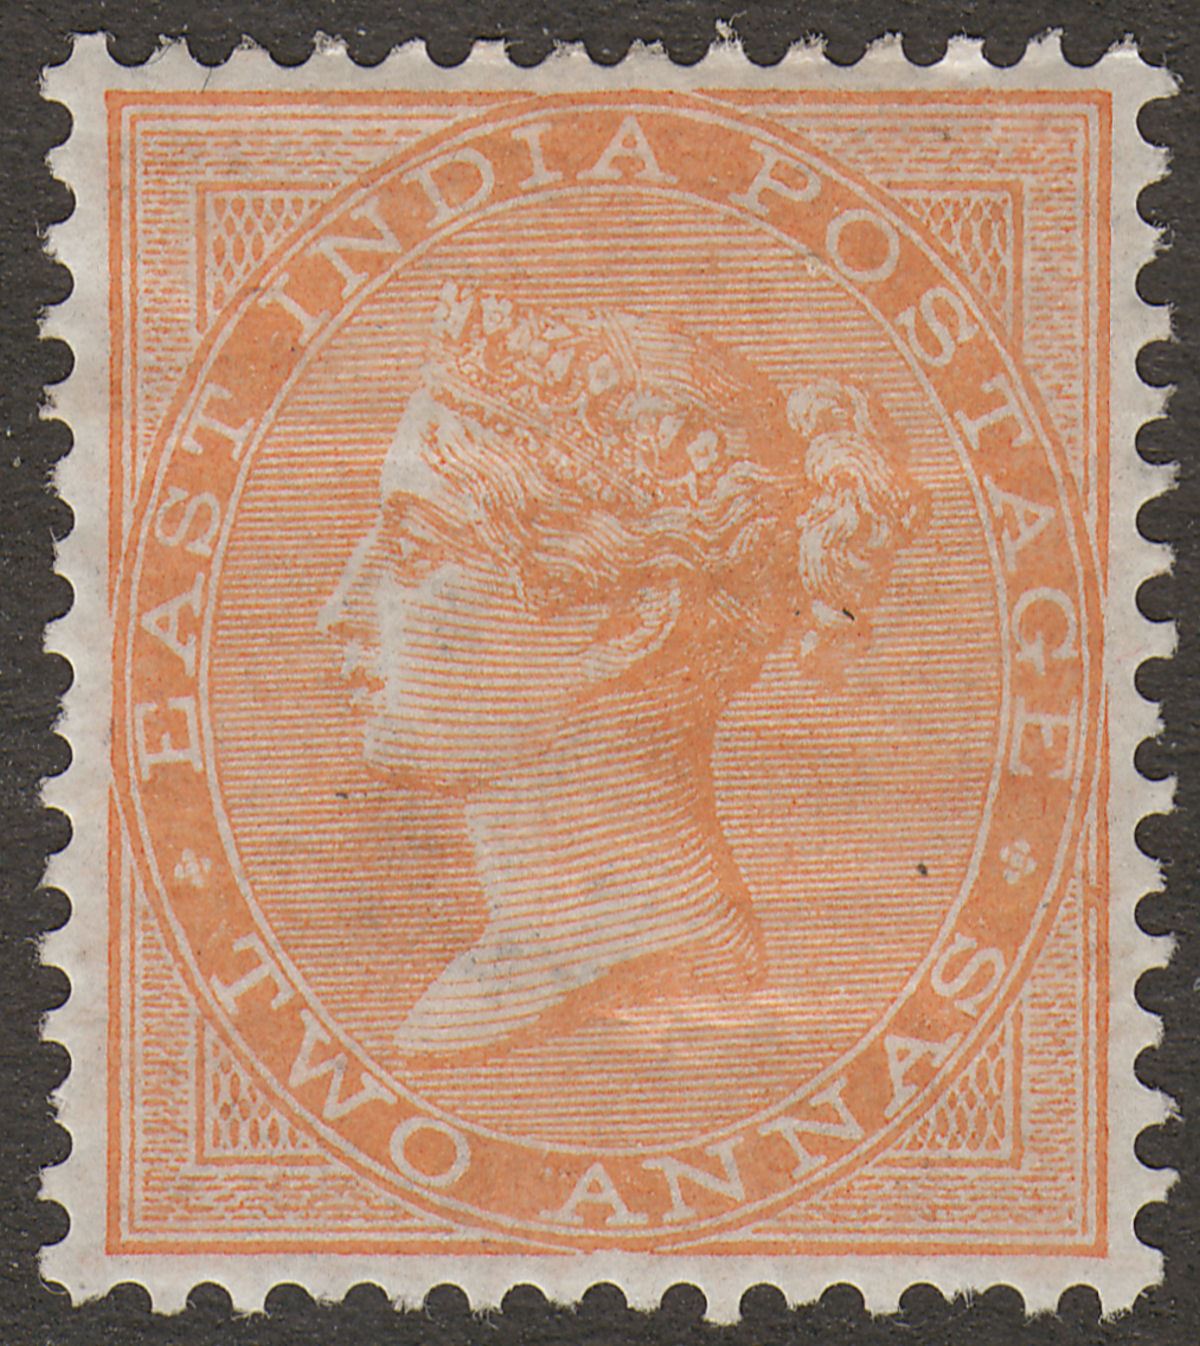 India 1865 QV 2a Orange Mint SG62 cat £150 wmk Elephant Head